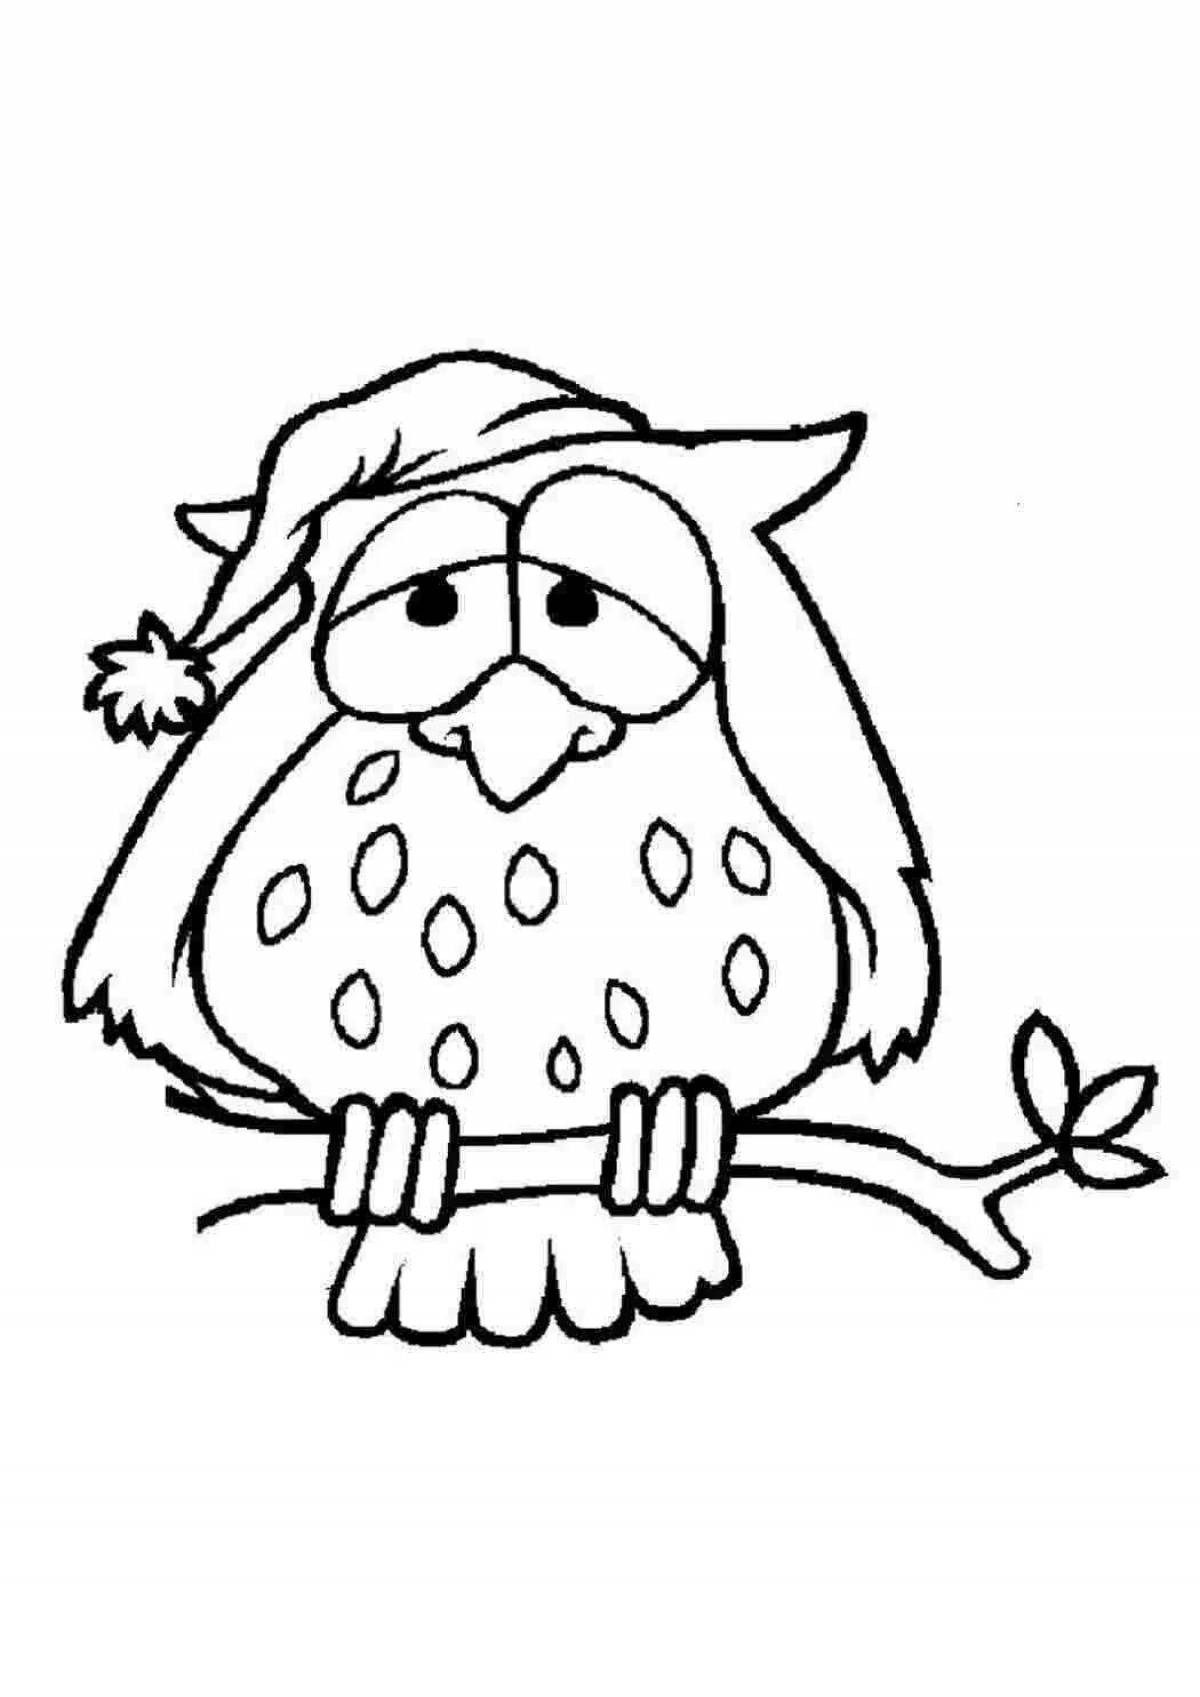 Fabulous Christmas owl coloring page